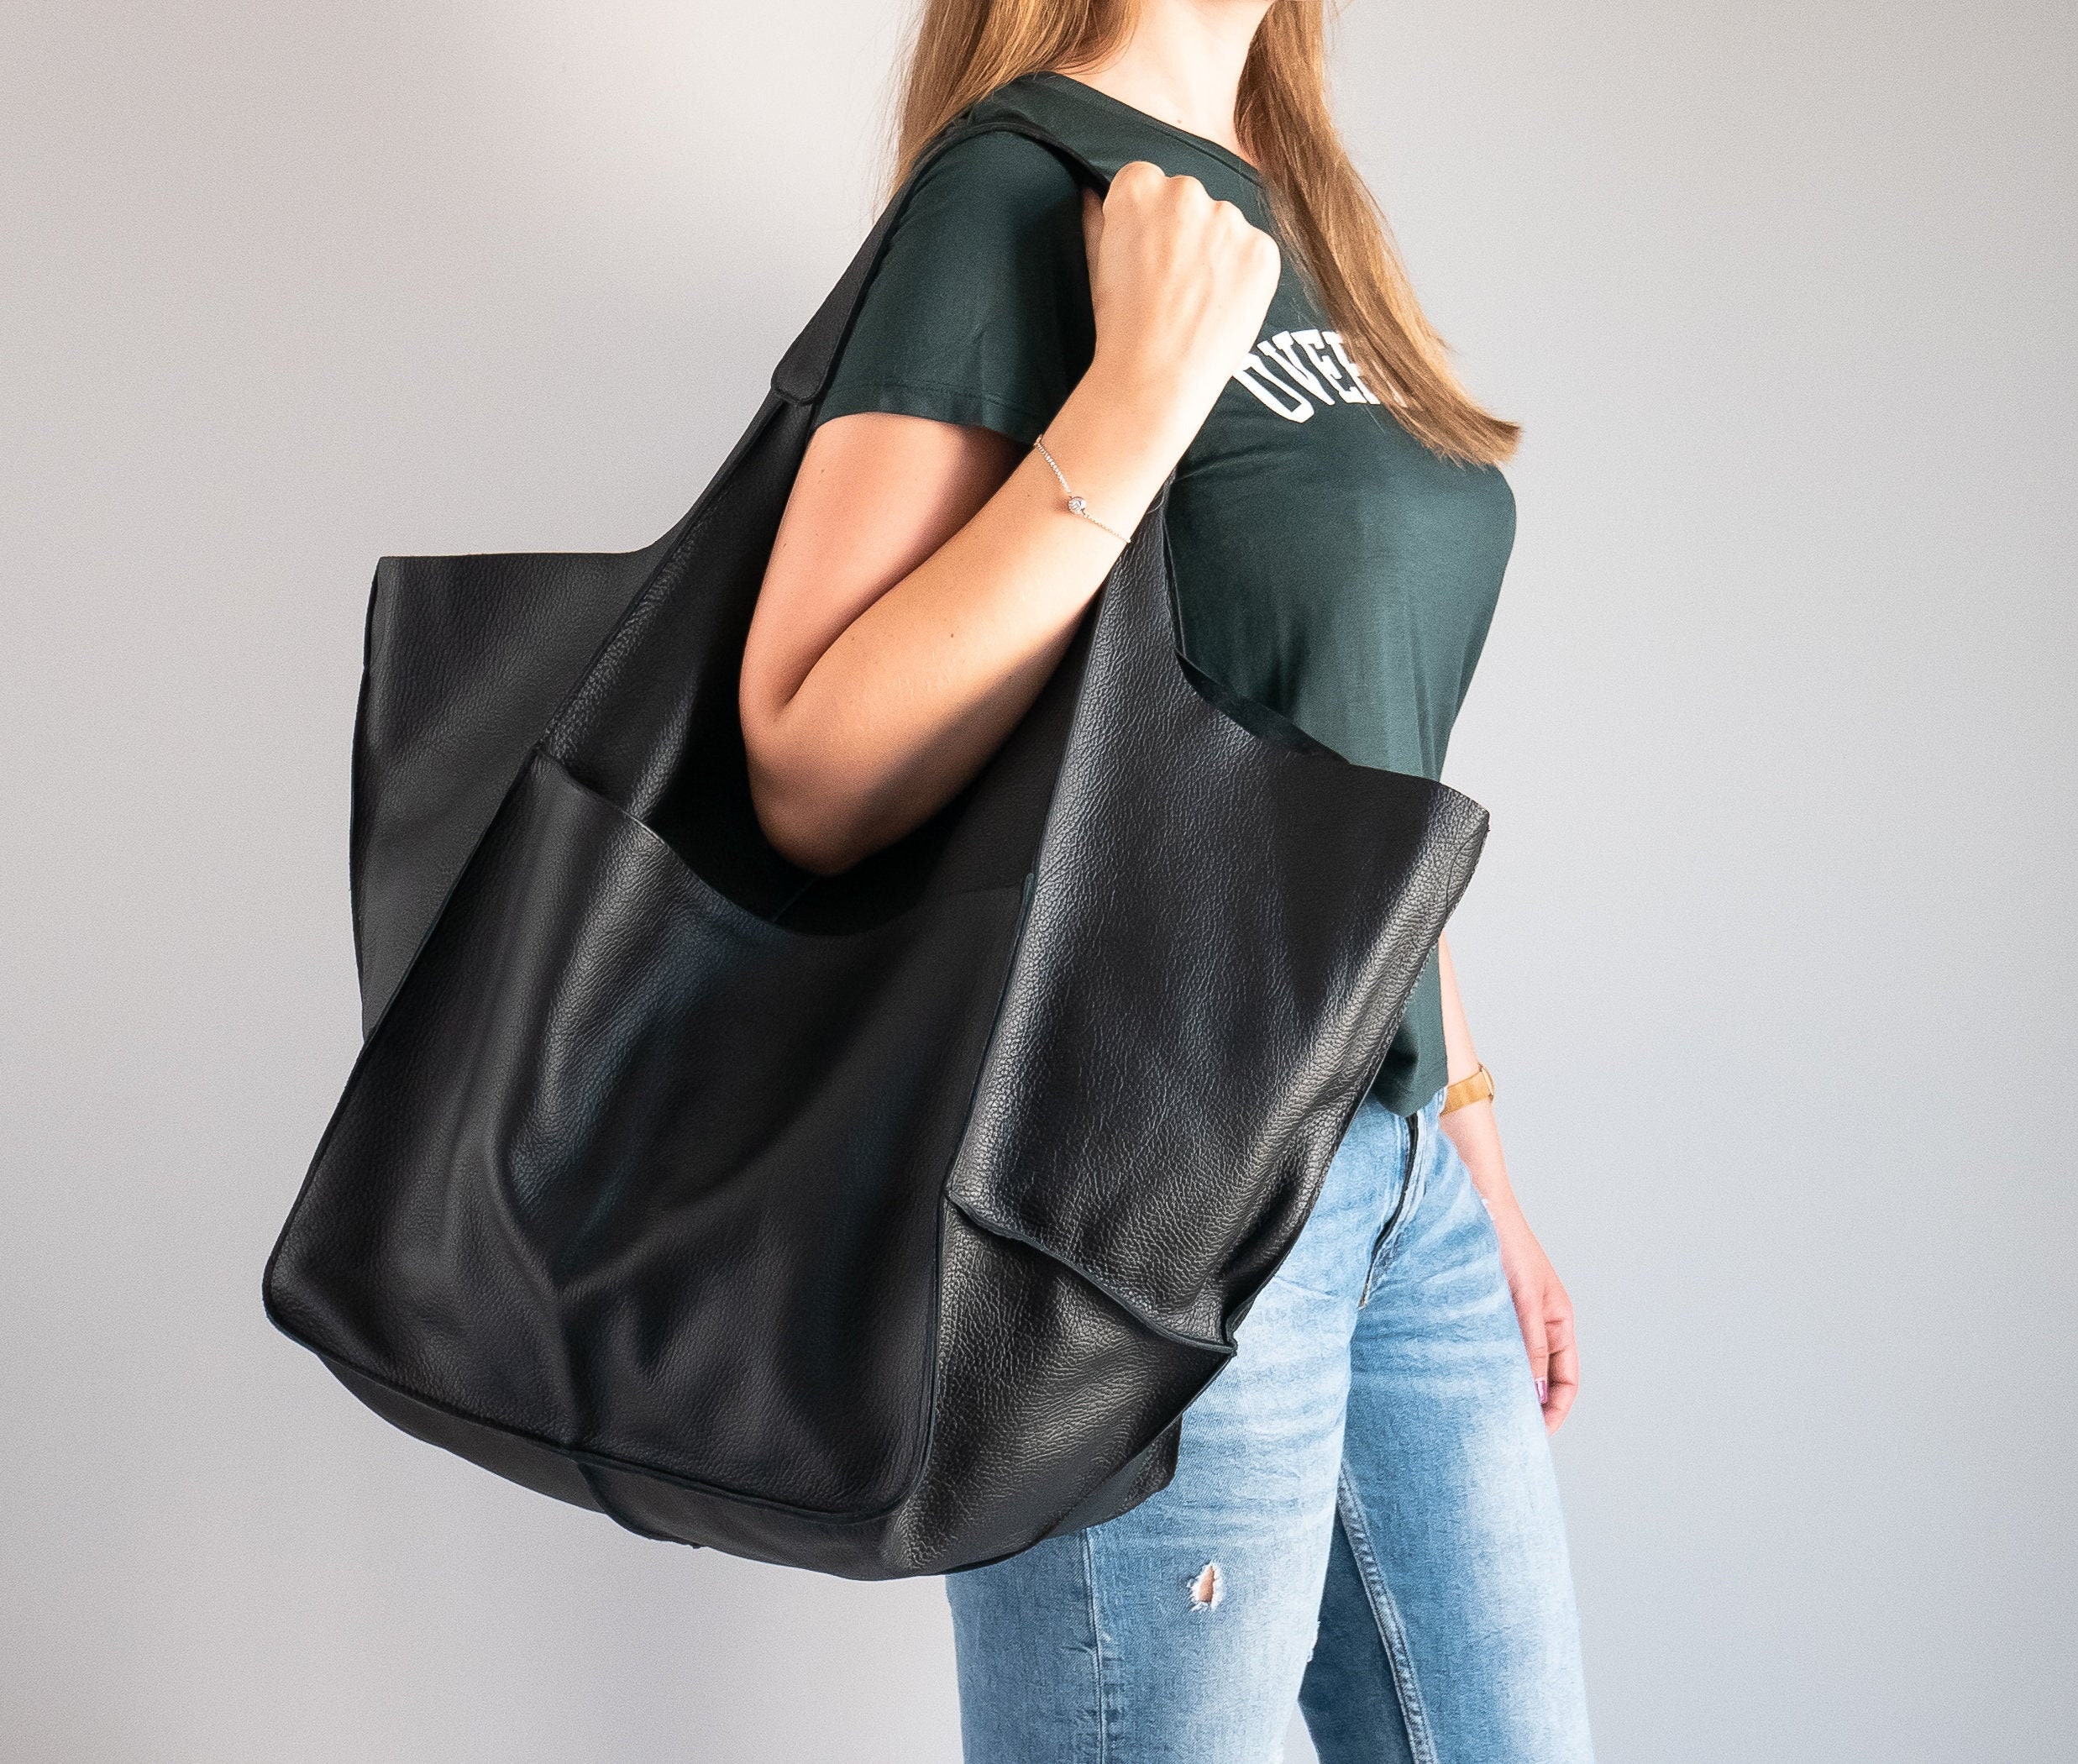 Women Large Black Tote Bag For School Ladies Shoulder Bag Hobo